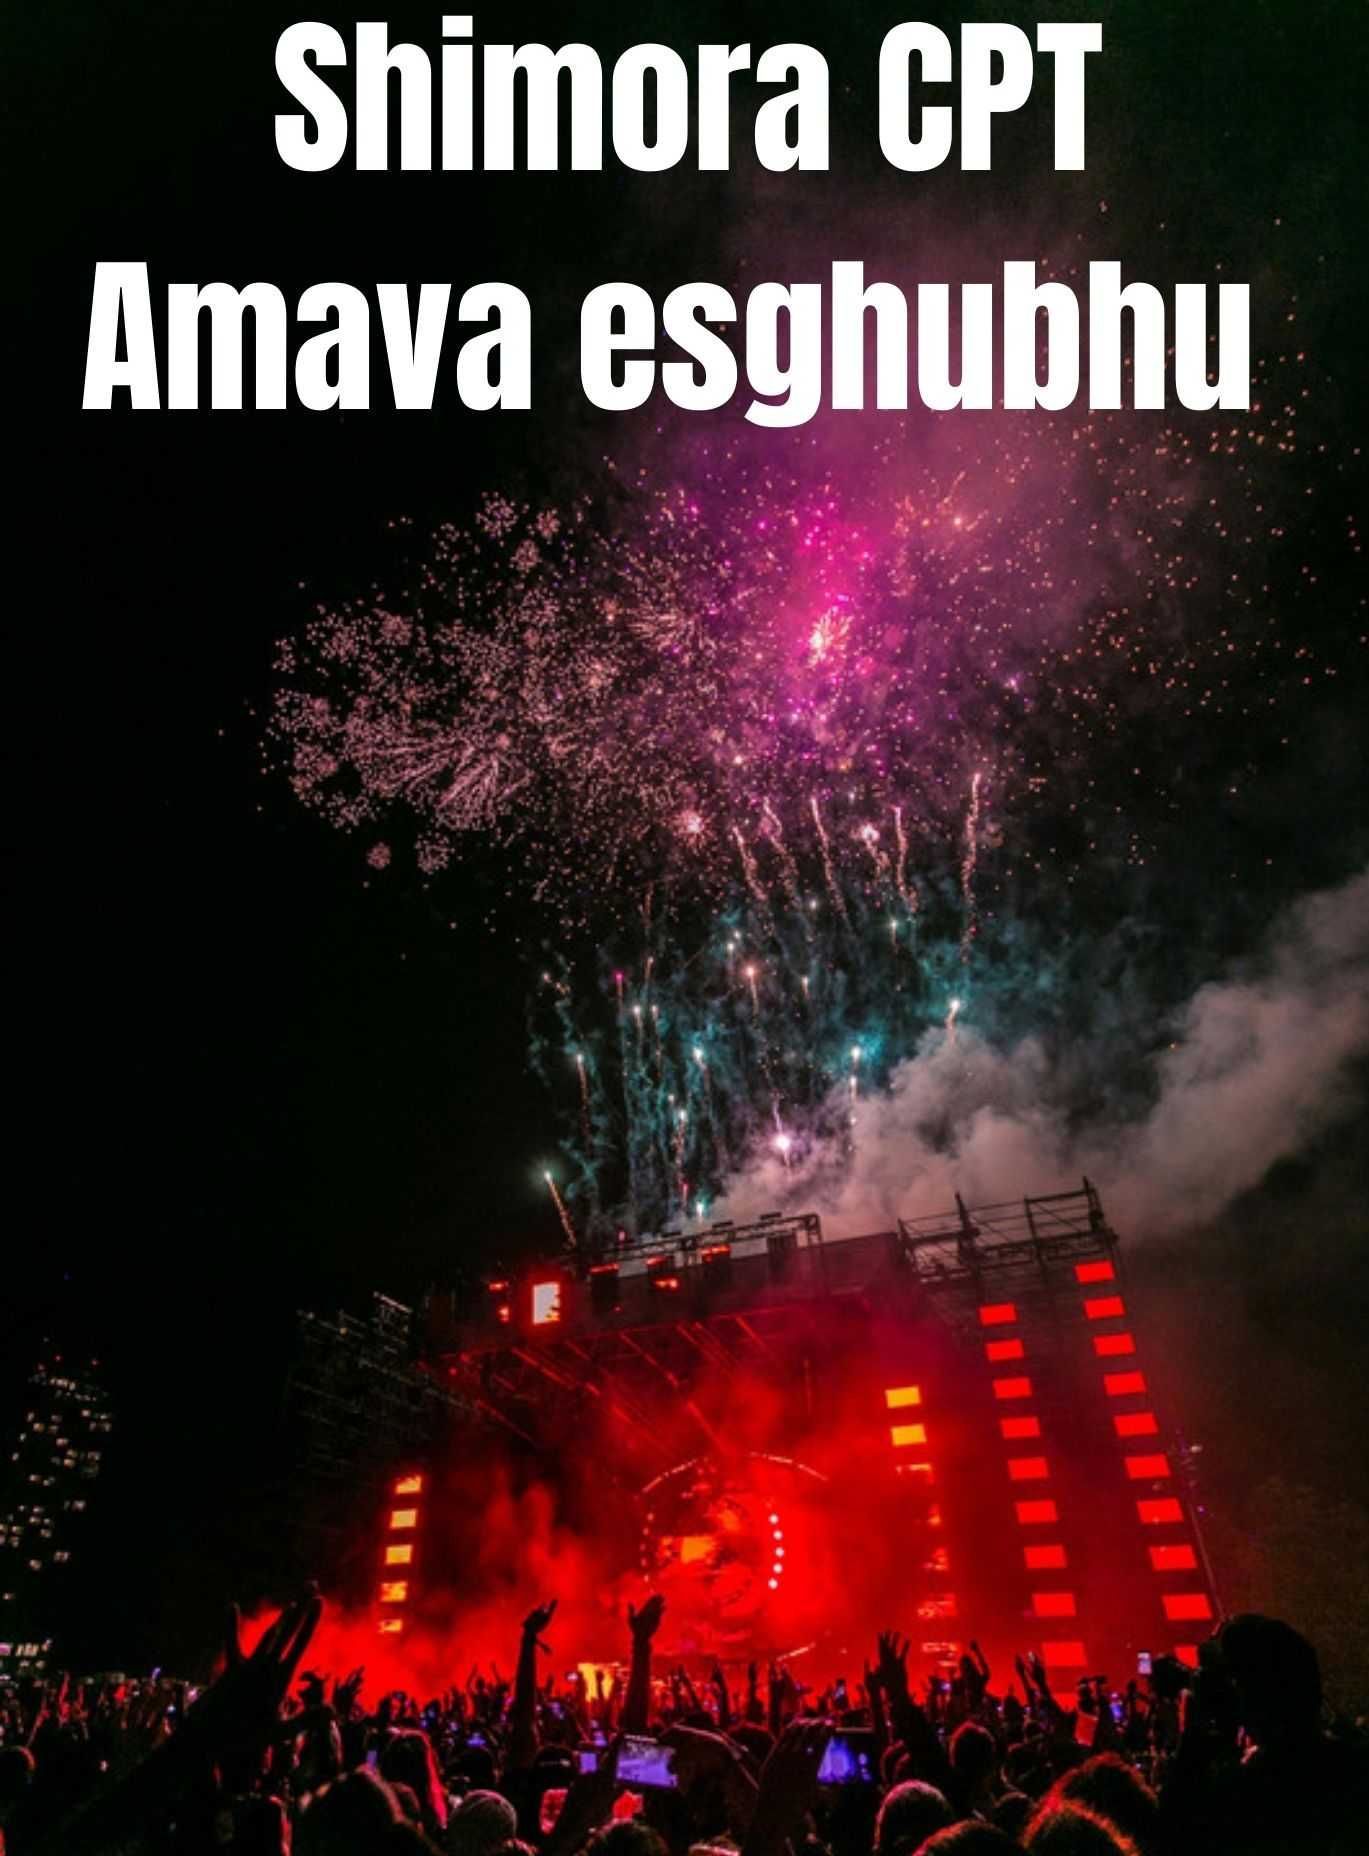 Amava esghubhu - Shimora CPT